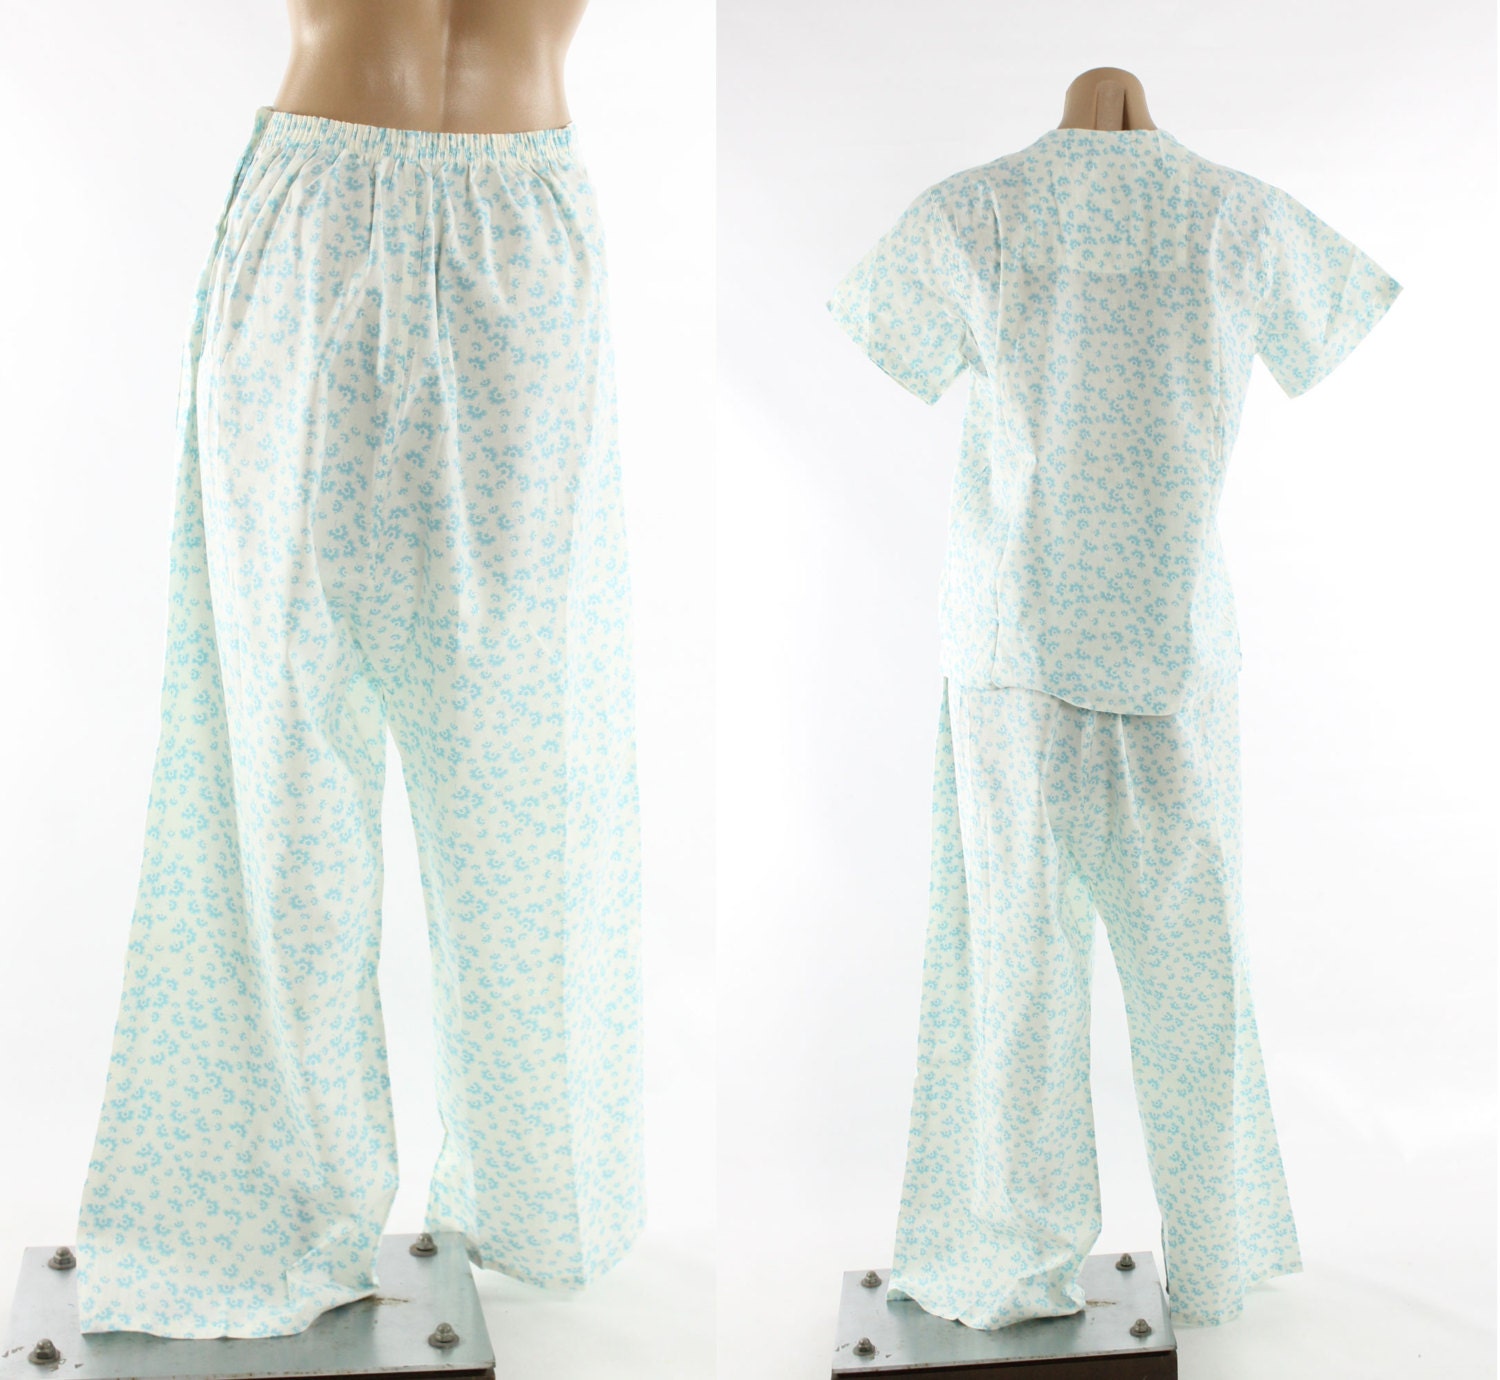 Details about   Girl Pajamas Sleep Trousers Cotton Court Vintage Princess Nightwear 2pcs 2041 